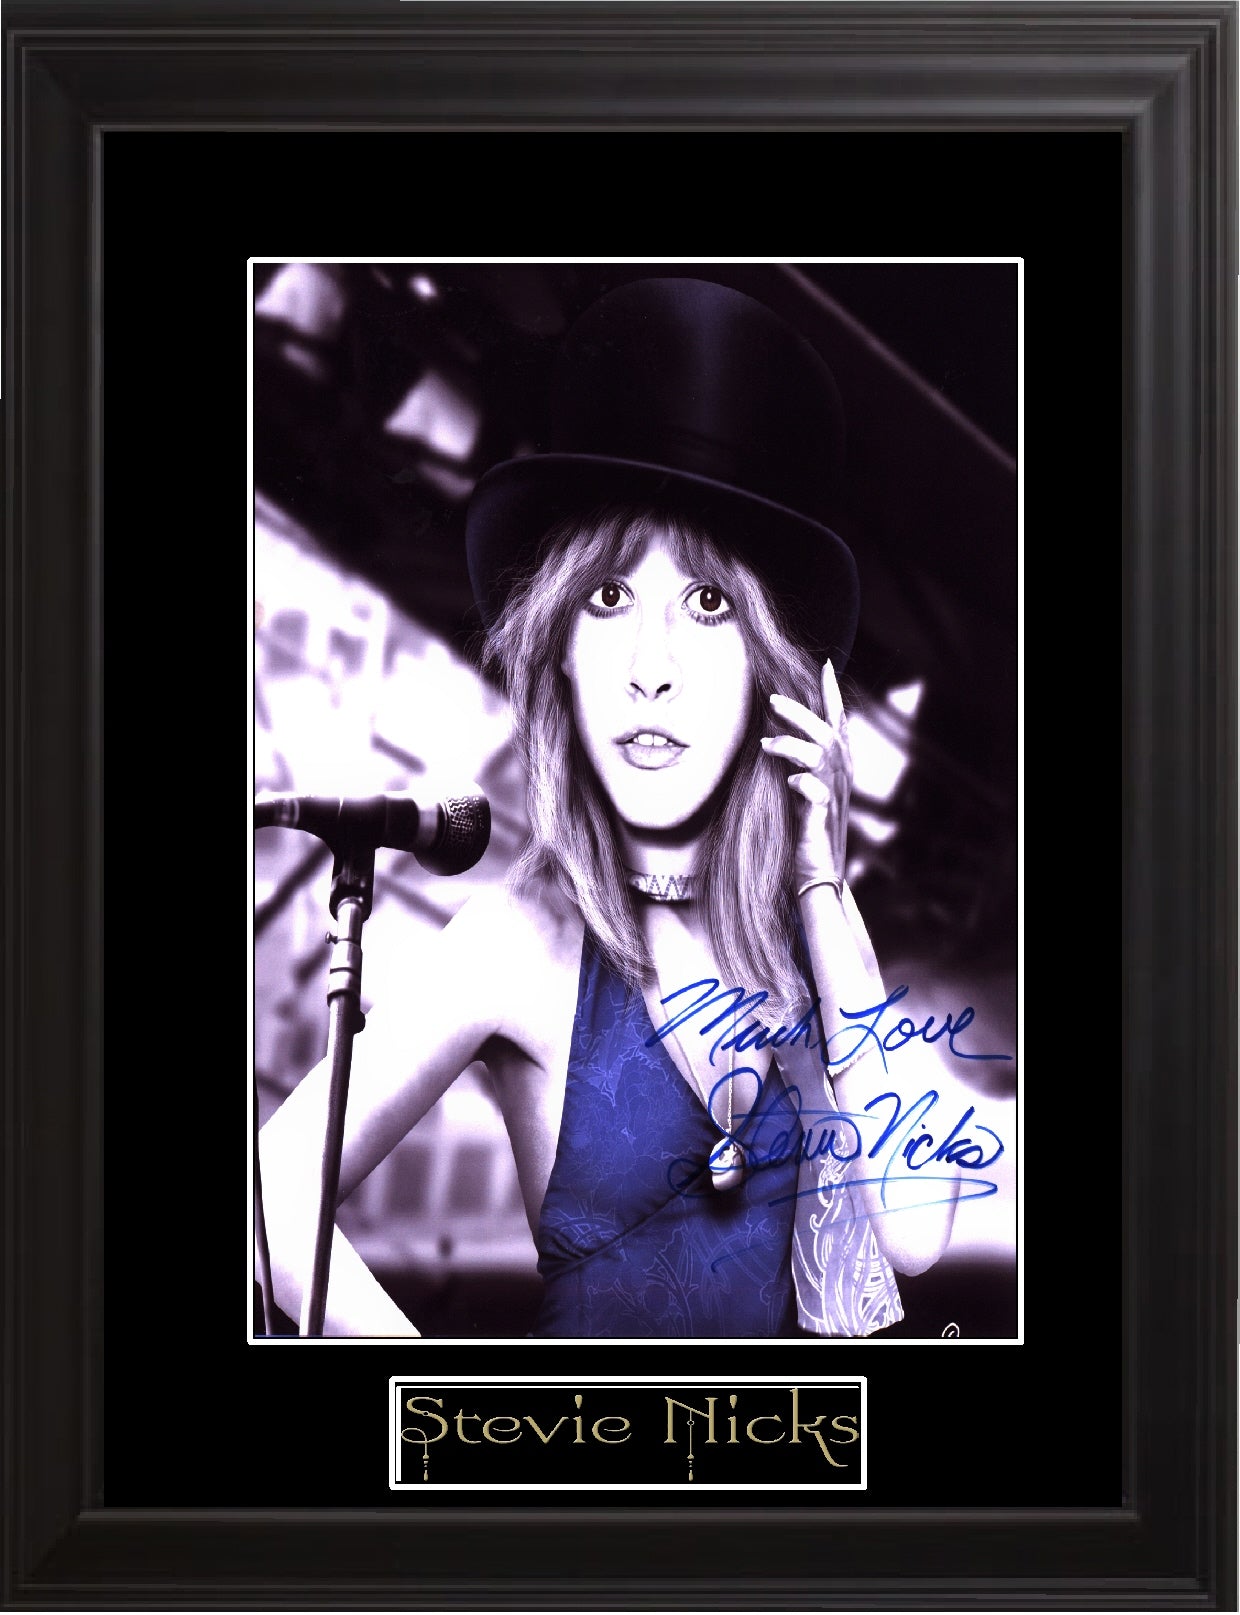 Stevie Nicks Autographed Photo - Zion Graphic Collectibles